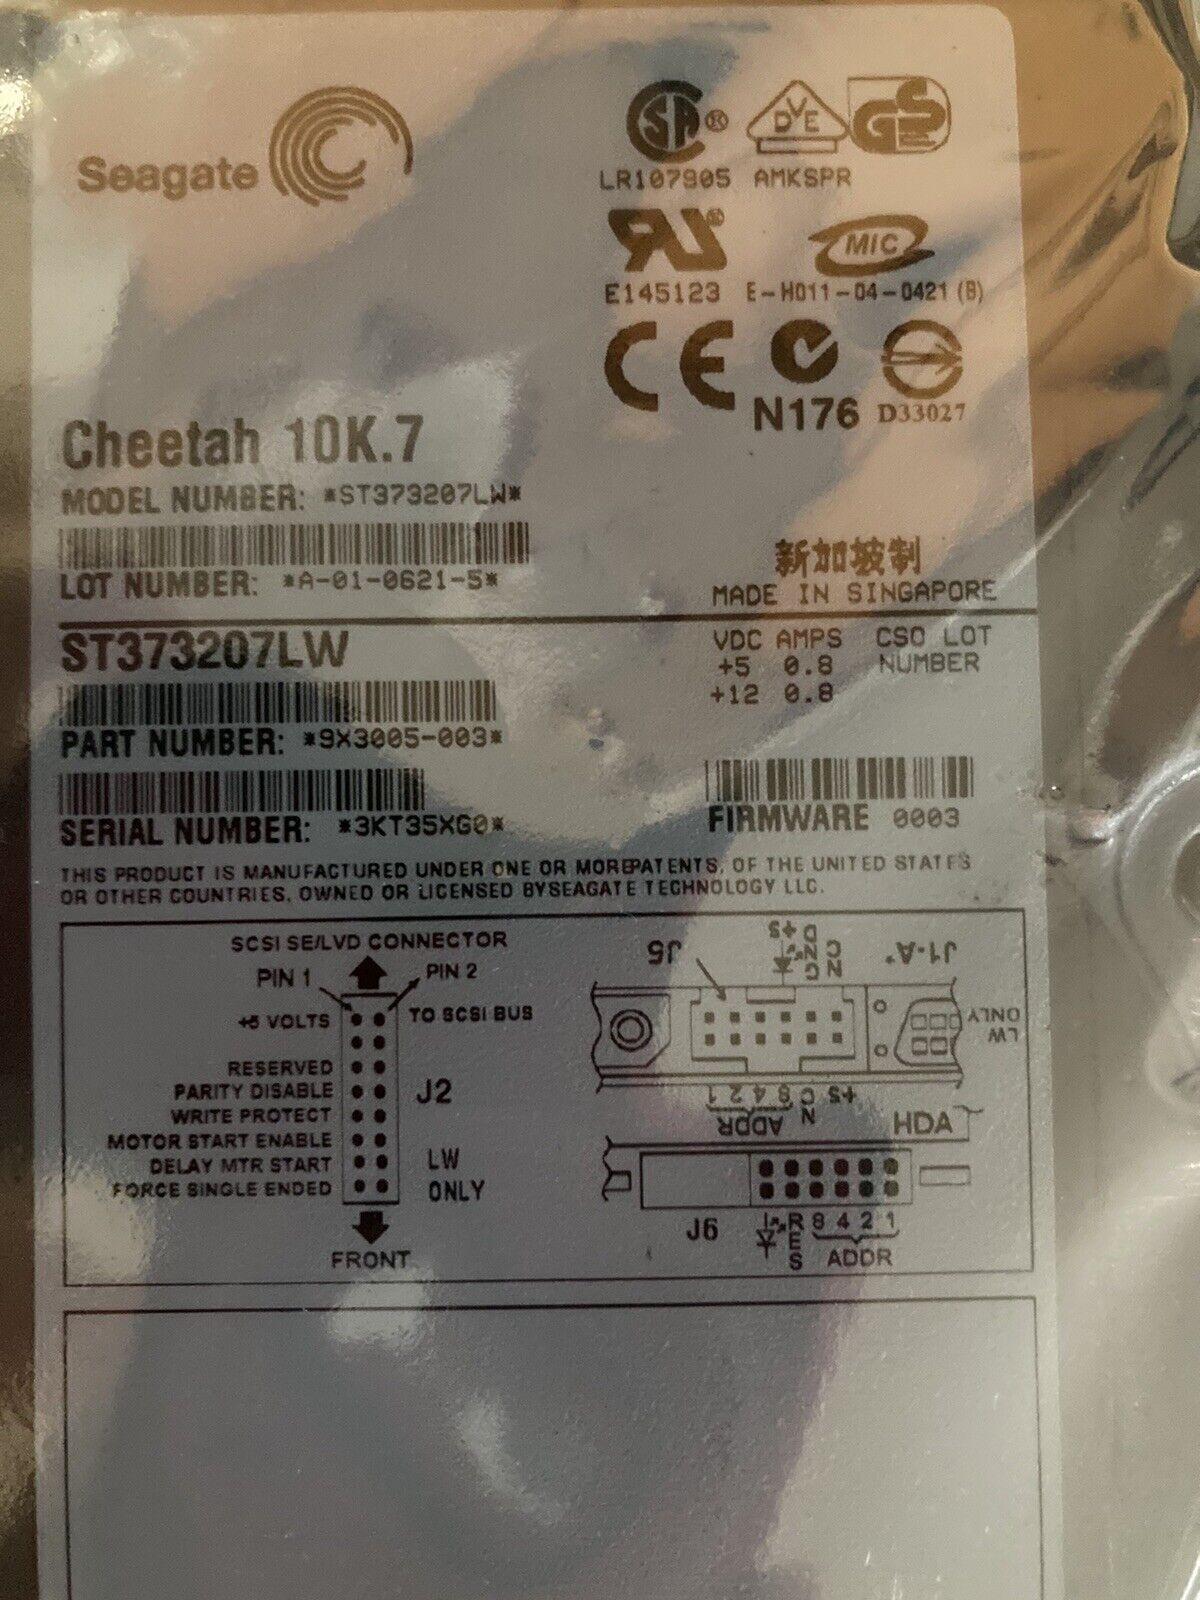 Seagate Cheetah 10k.7 ST373207LW 73 Gb SCSI 3.5 Internal Hard Drive